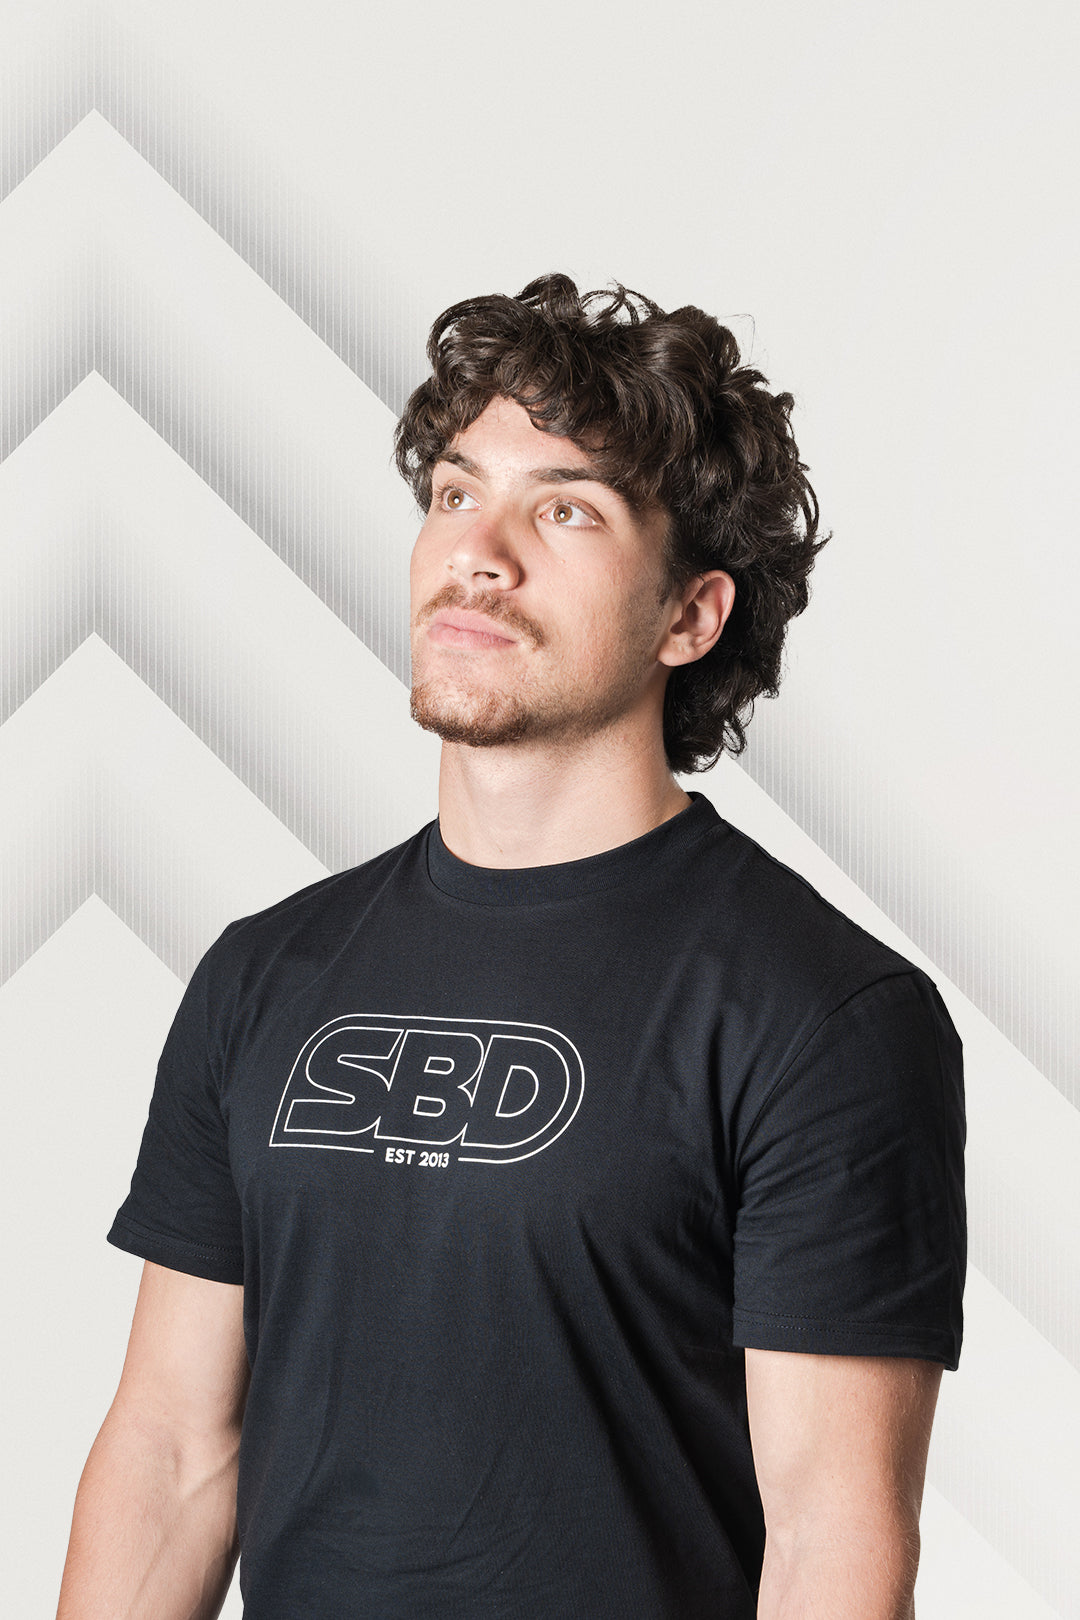 SBD Momentum T-Shirt - Brand